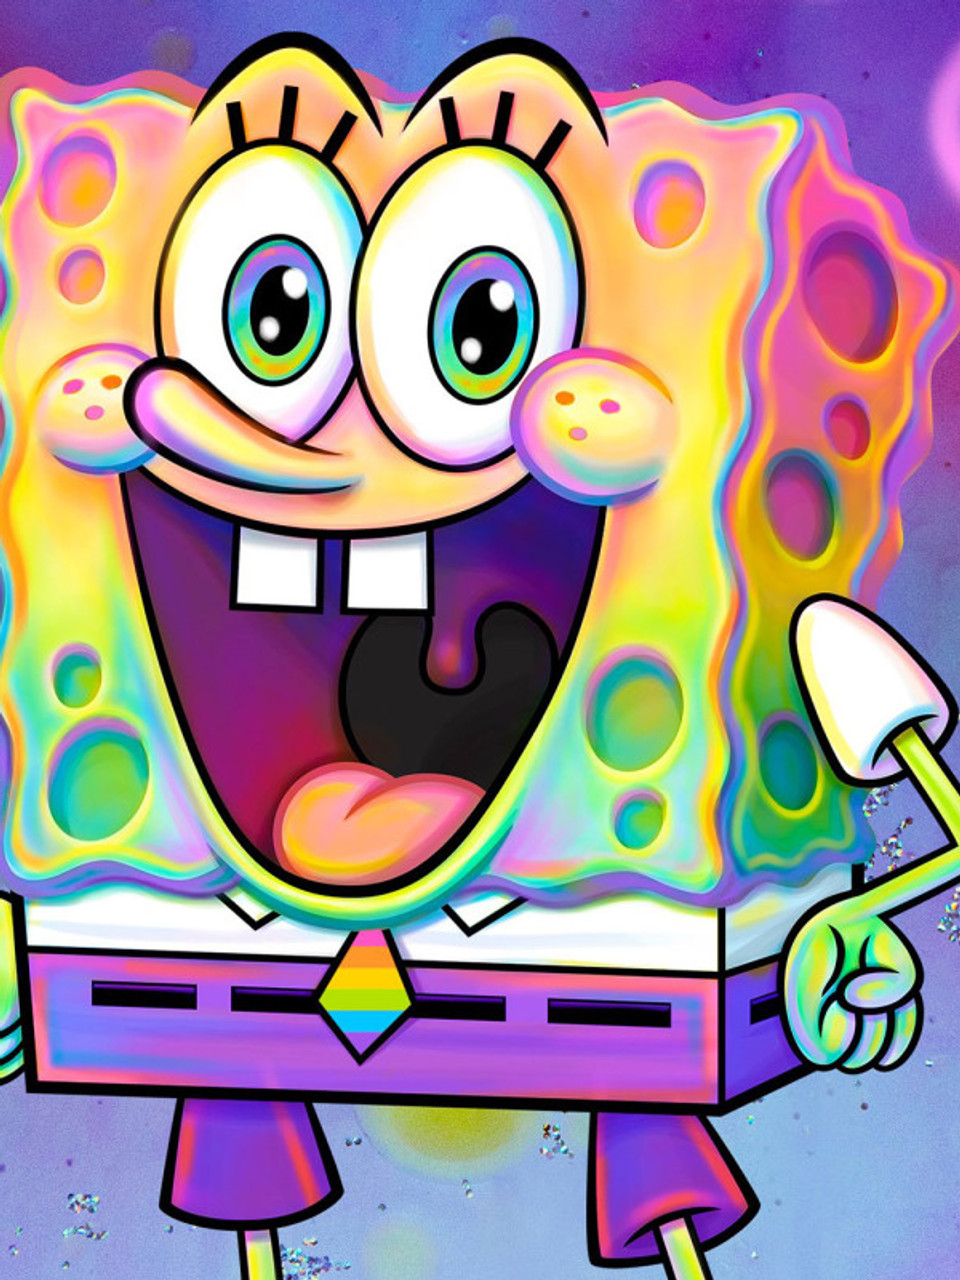 Twitter abuzz Spongebob might be gay after Nickelodeon tweet honoring LGBTQ+ community